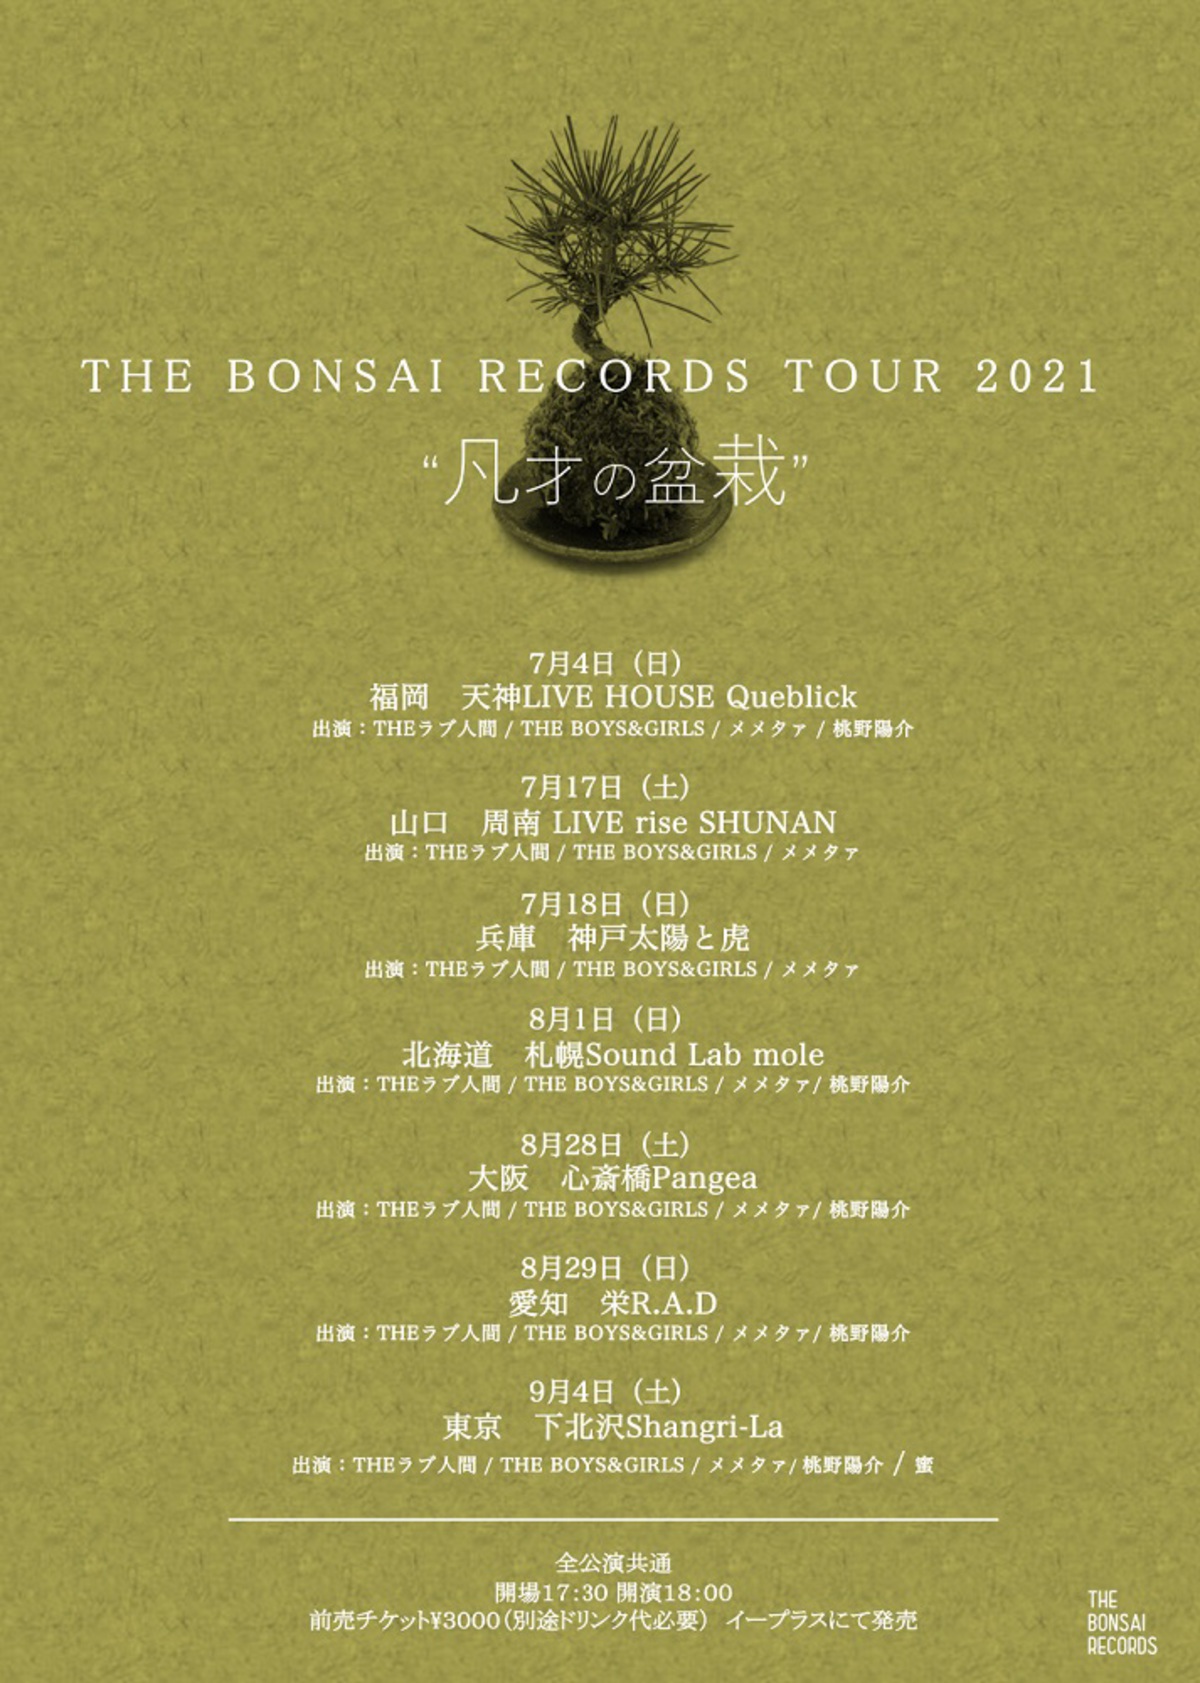 Theラブ人間 The Boys Girls メメタァ 桃野陽介 蜜が所属の The Bonsai Records レーベル ツアー The Bonsai Records Tour 21 凡才の盆栽 開催決定